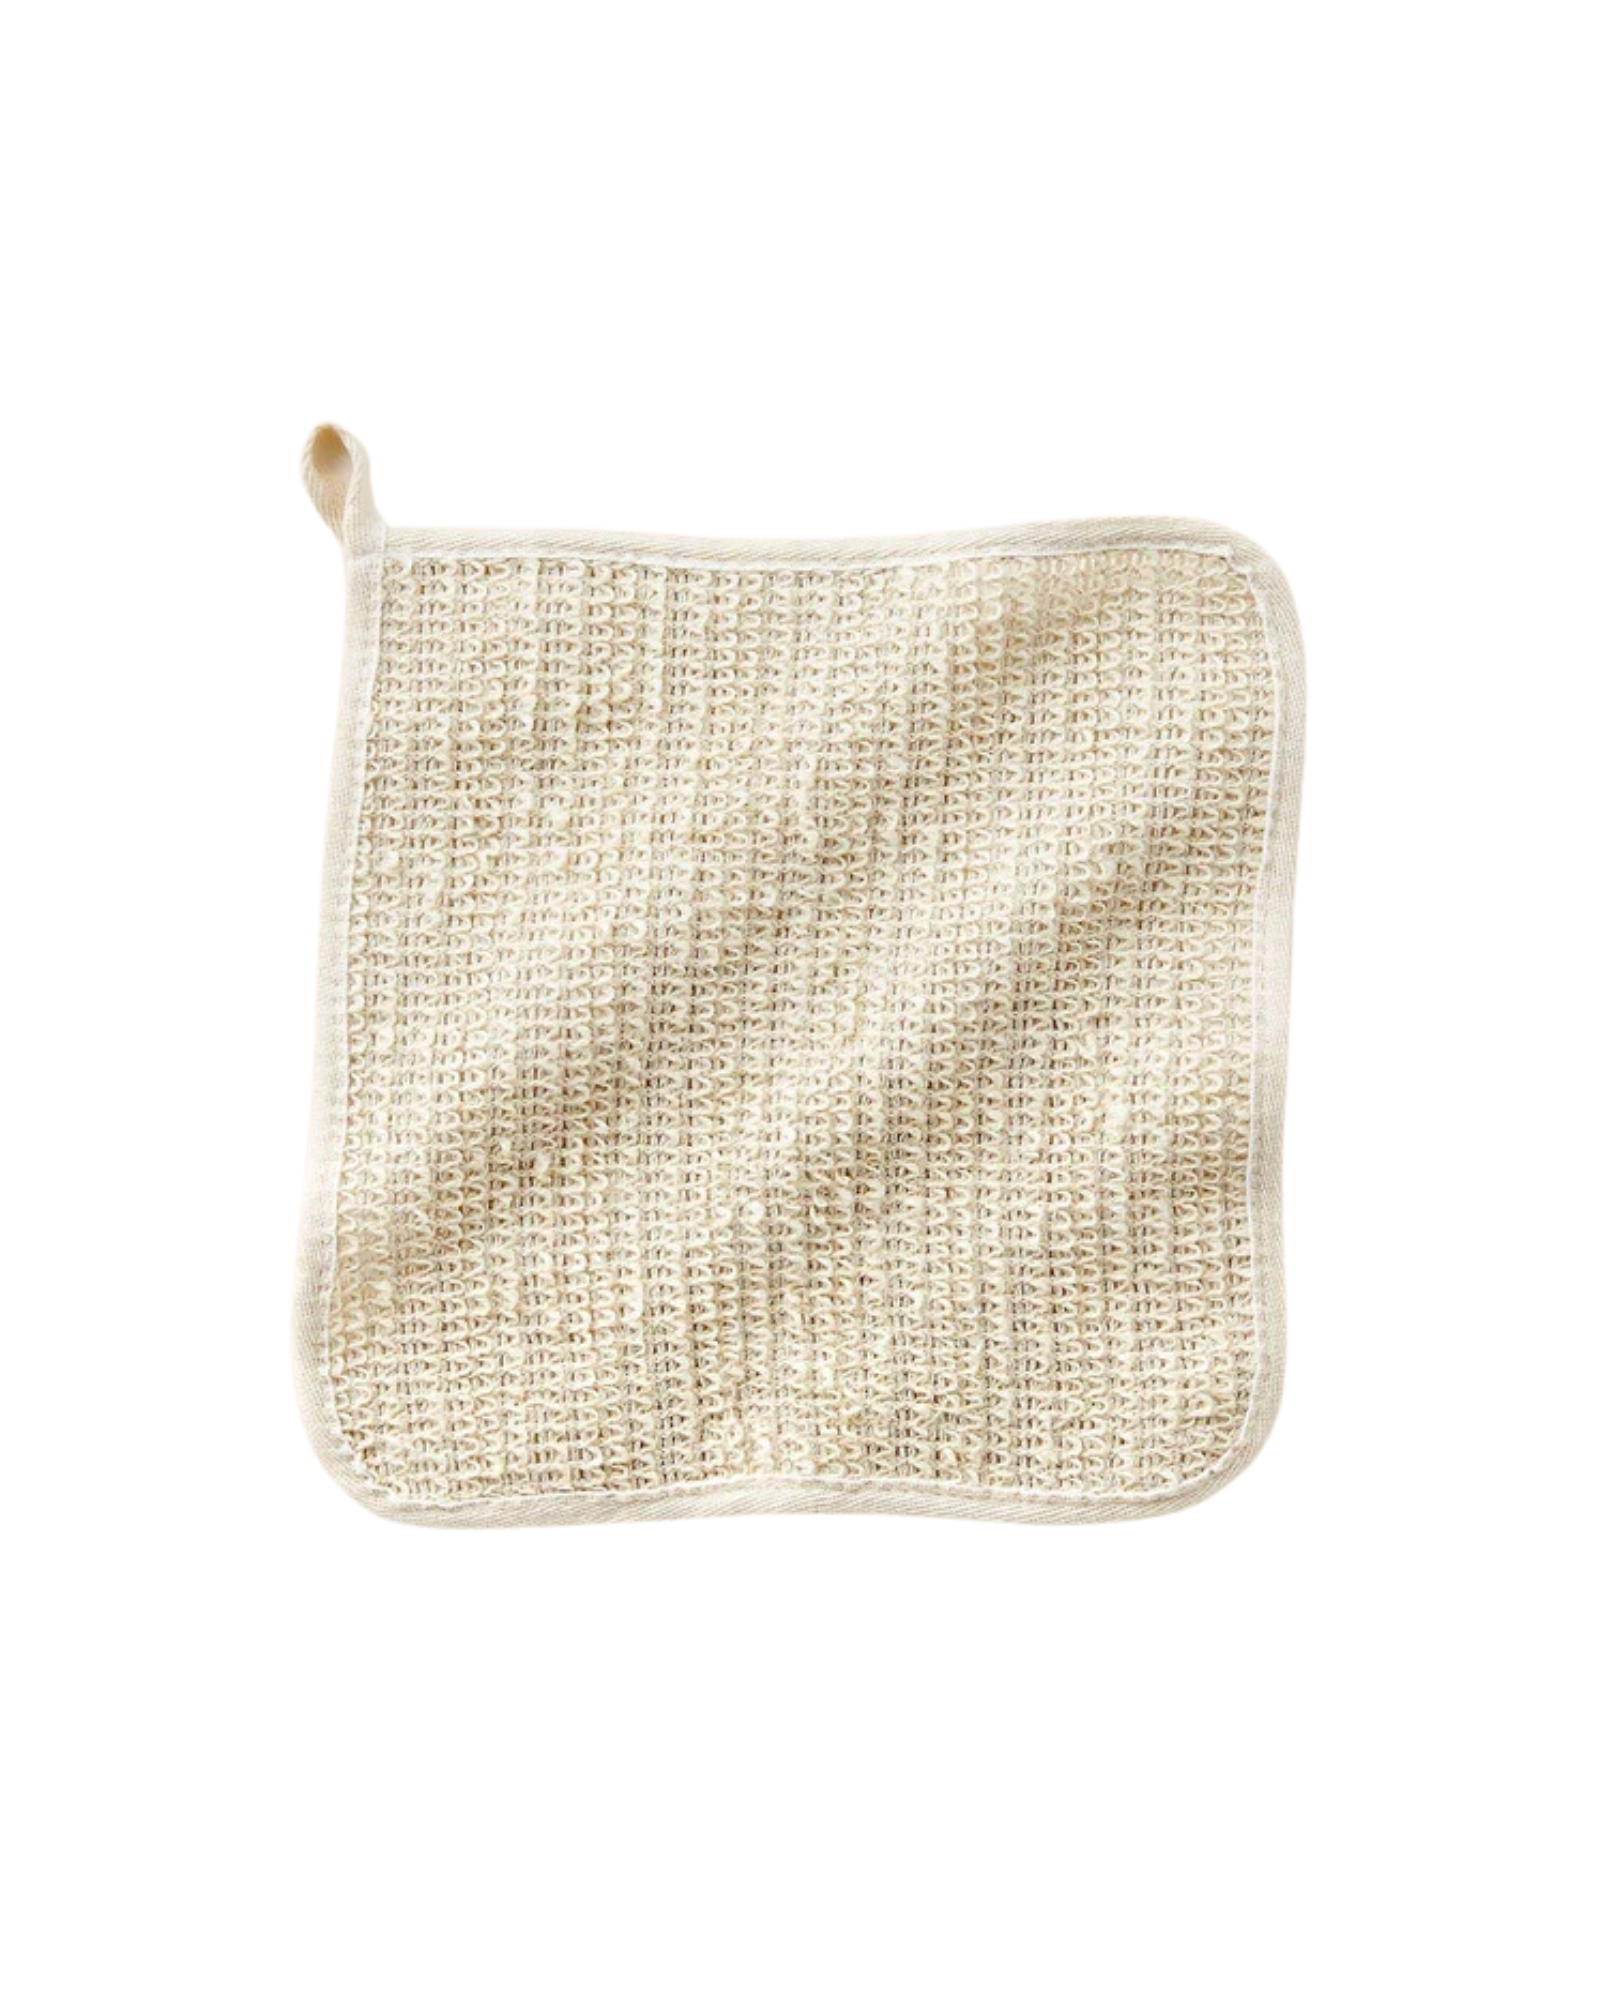 Tan, square agave washcloth